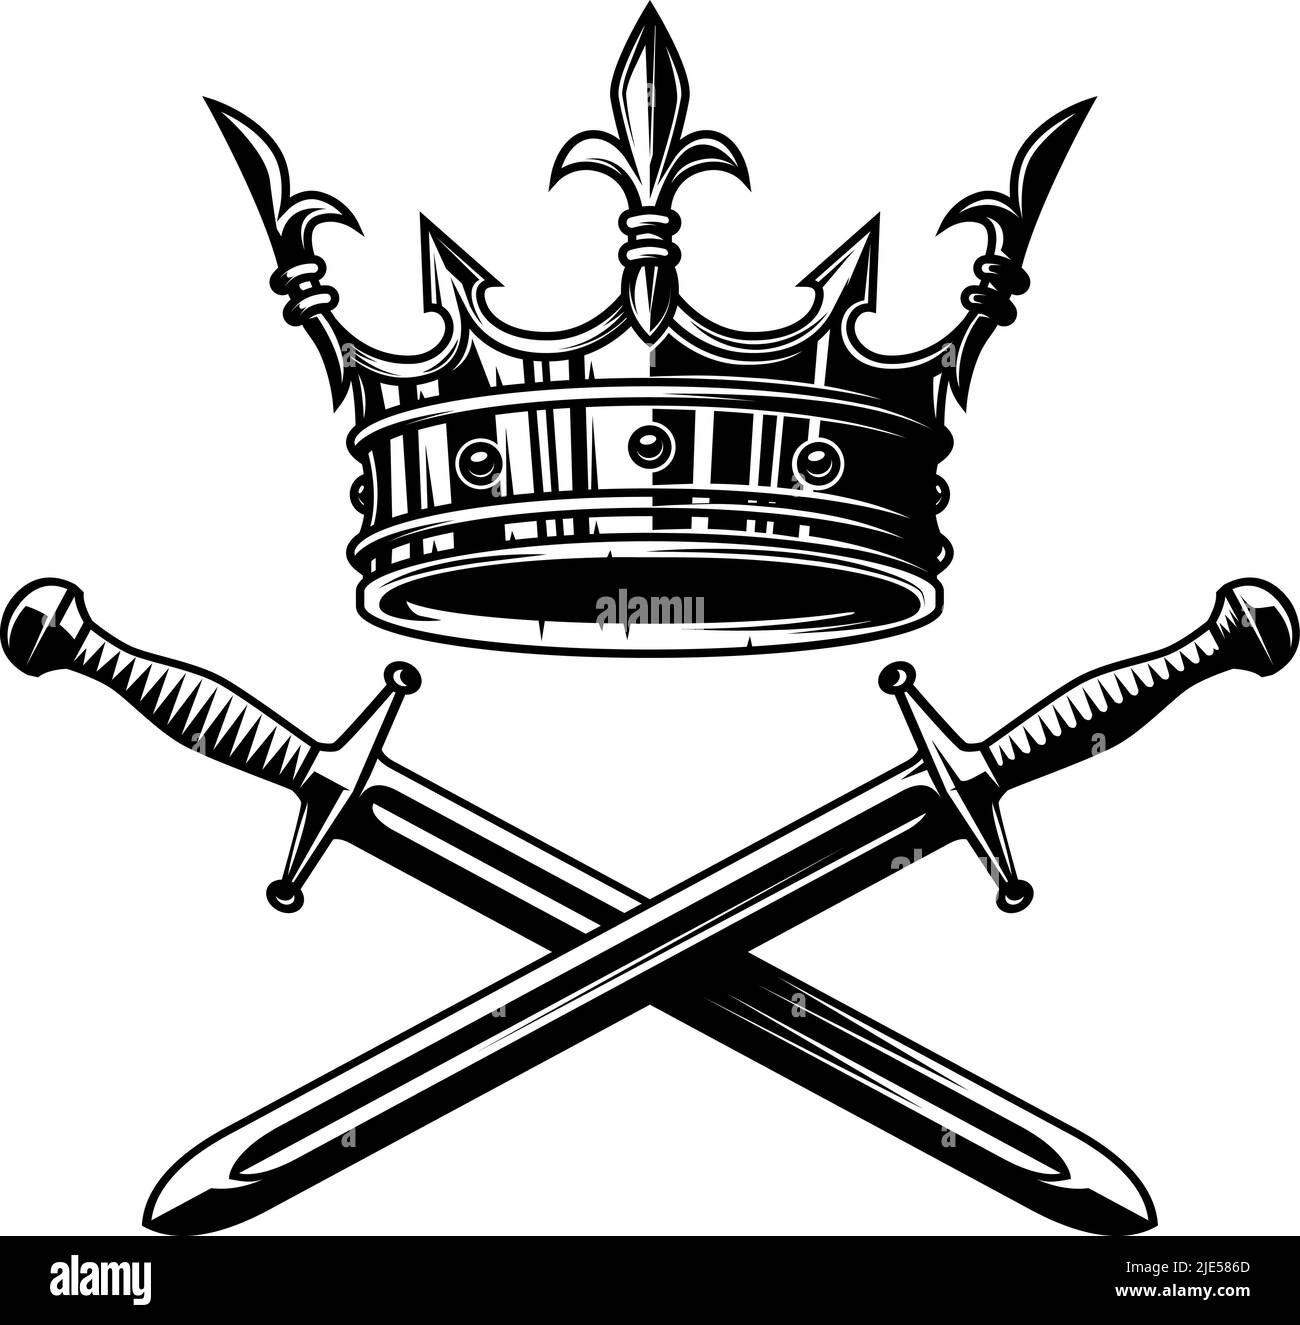 Illustration of king crown and crossed swords in monochrome style. Design element for logo, emblem, sign, poster, t shirt. Vector illustration, Illust Stock Vector